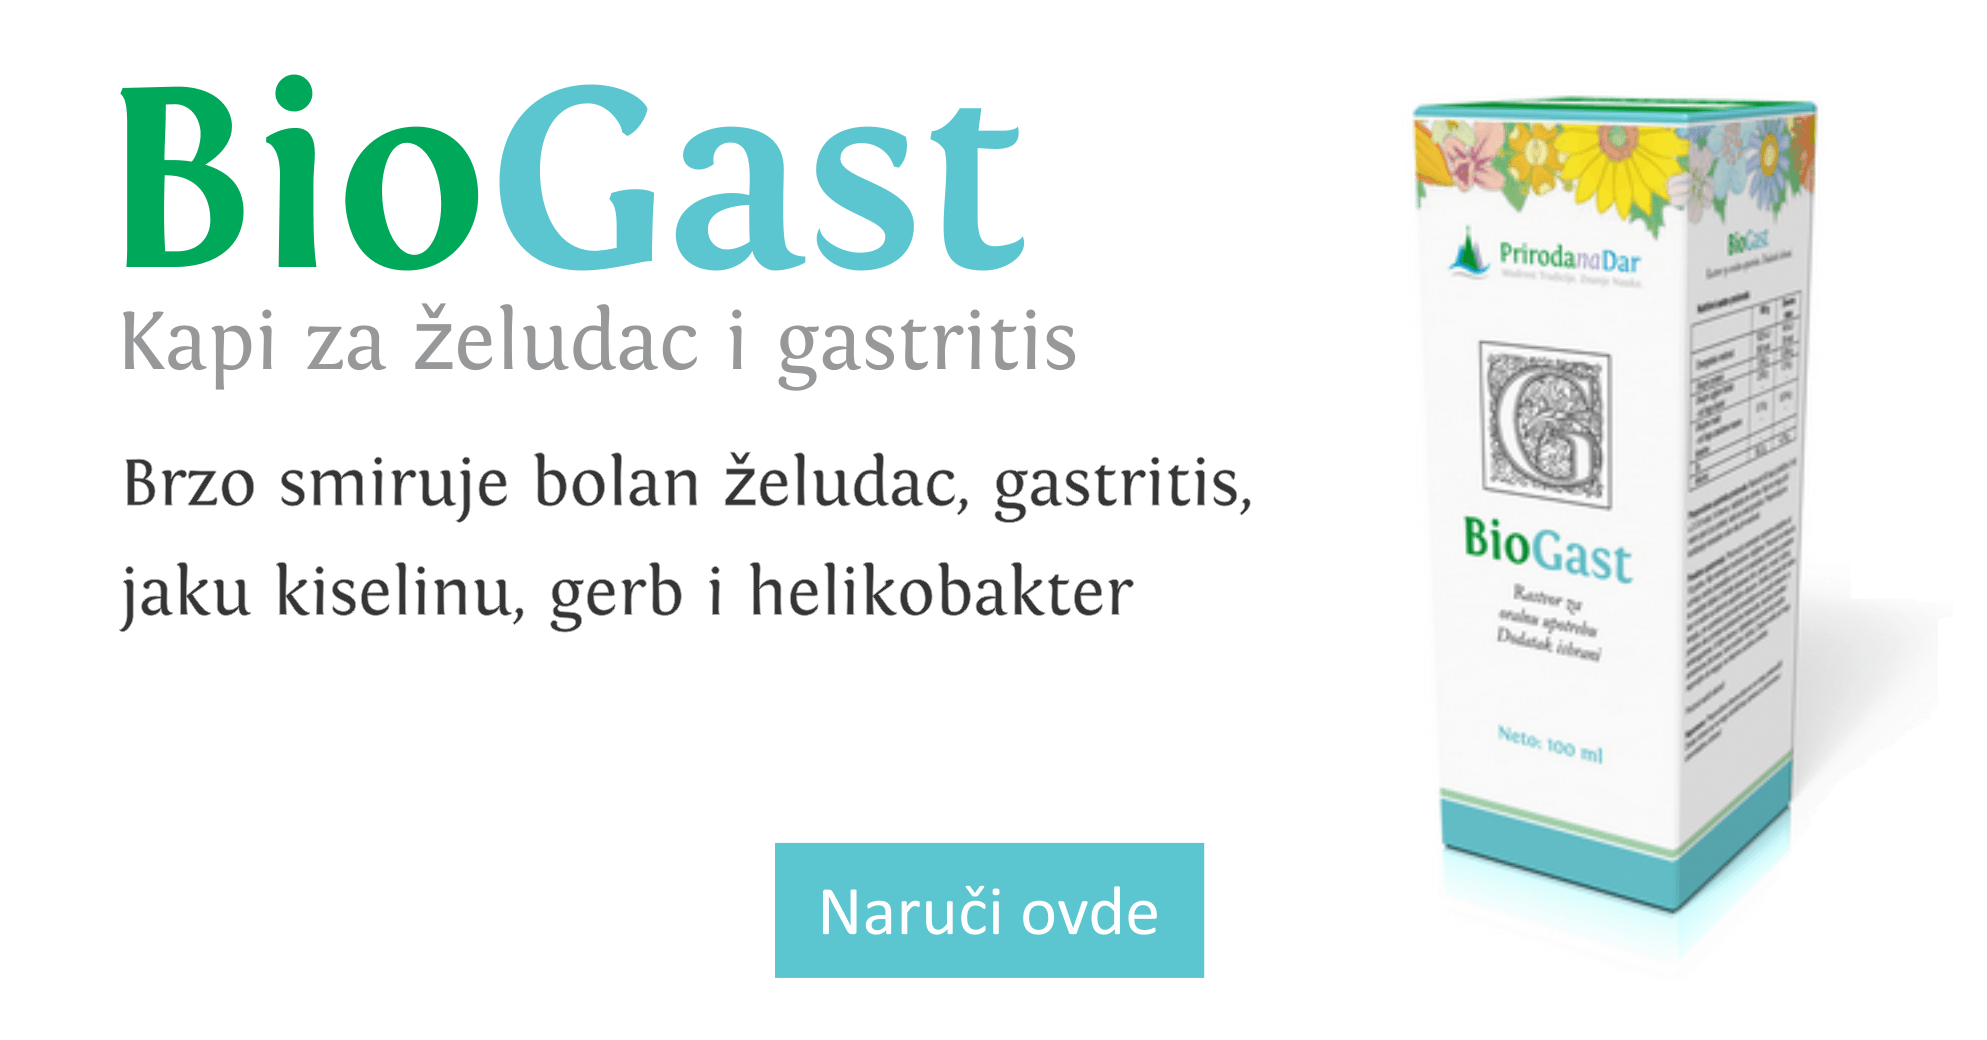 BioGast kapi za gastritis i lek za peptički ulkus i Helicobacter pilory